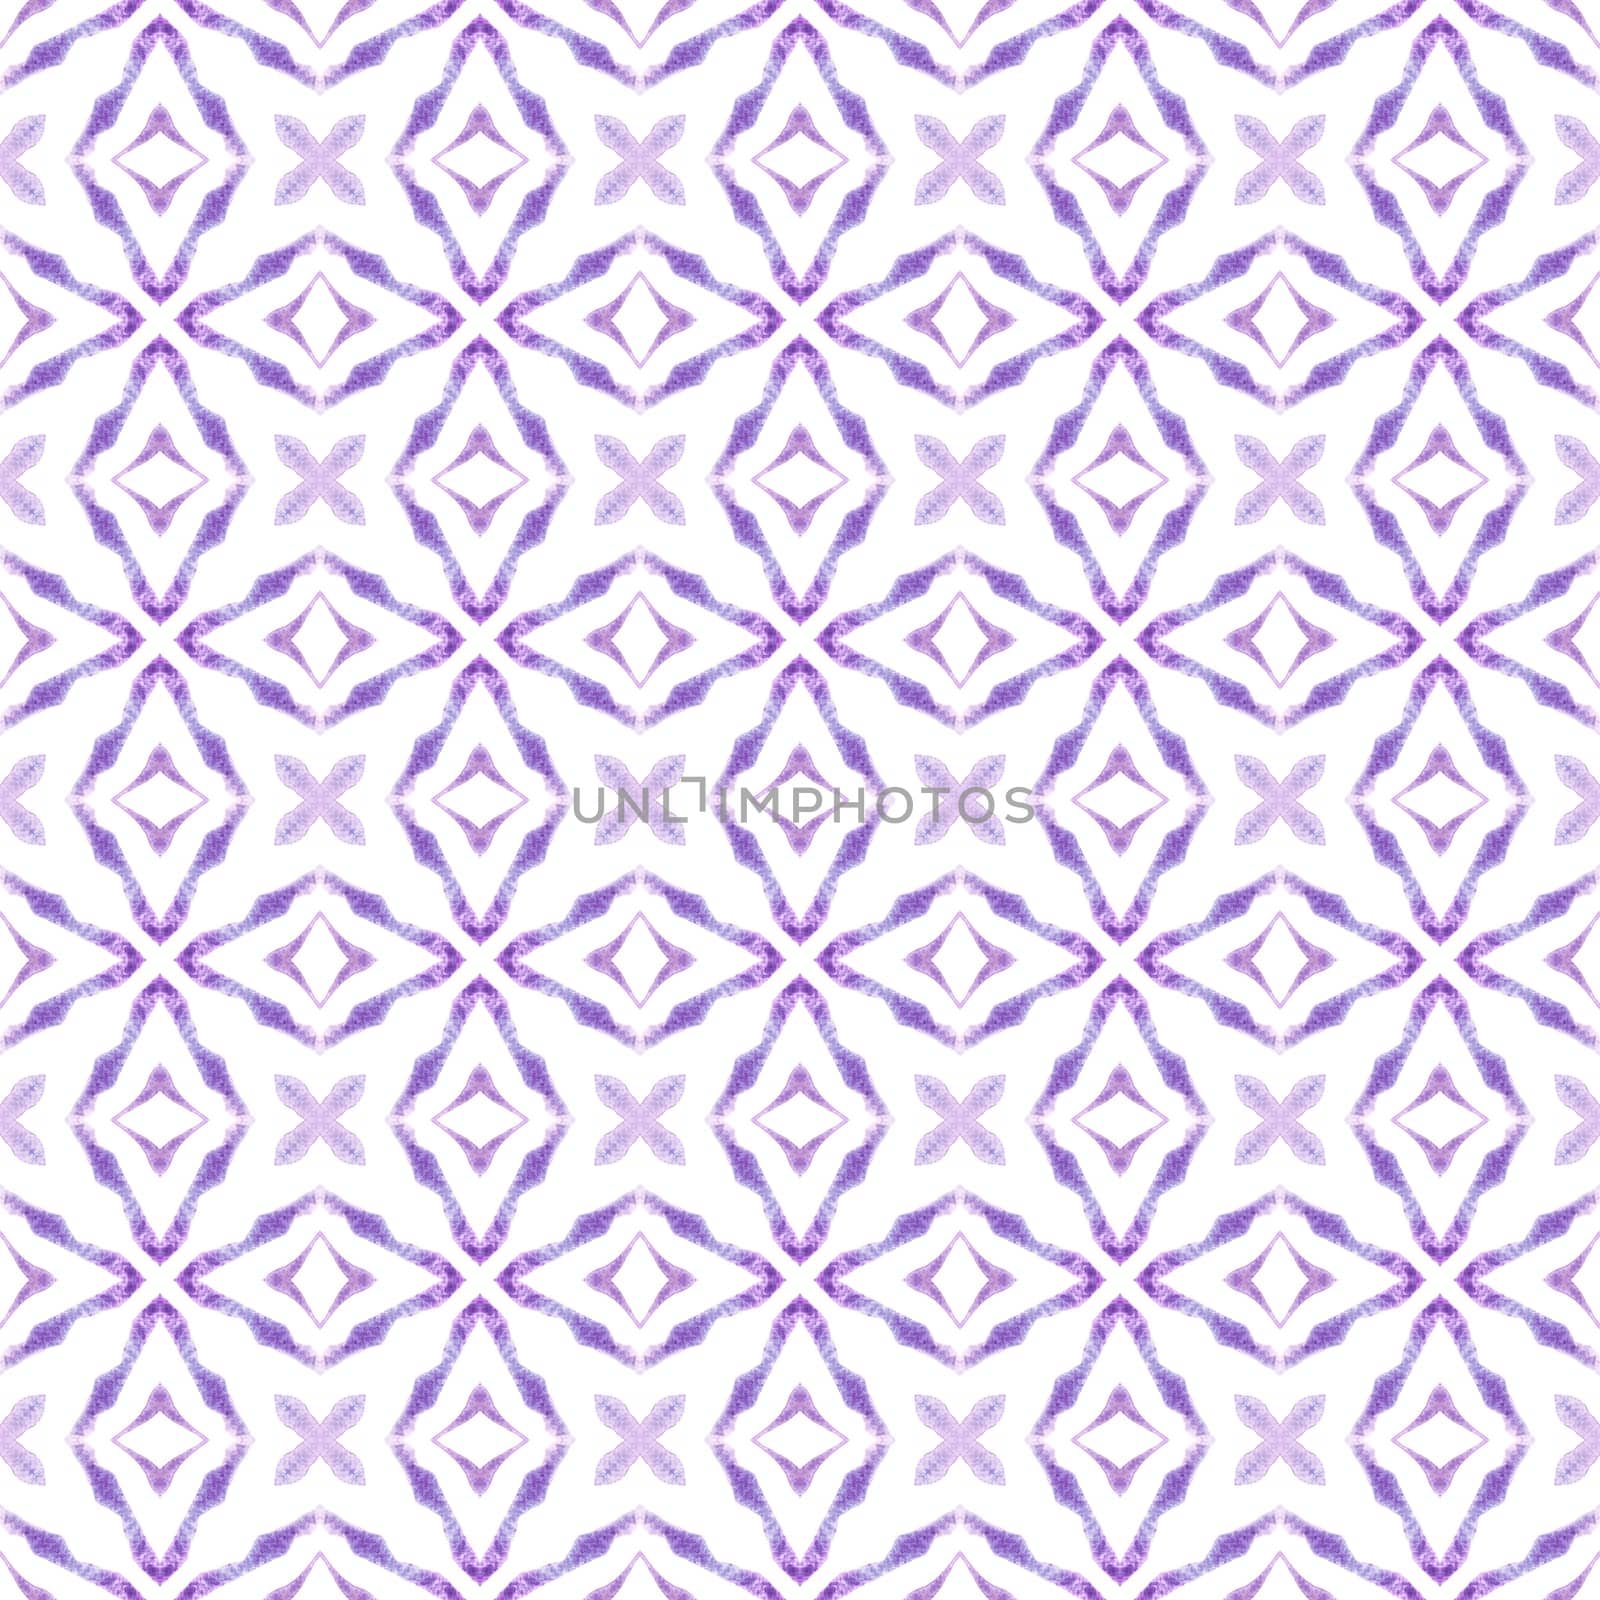 Arabesque hand drawn design. Purple ravishing boho chic summer design. Oriental arabesque hand drawn border. Textile ready artistic print, swimwear fabric, wallpaper, wrapping.